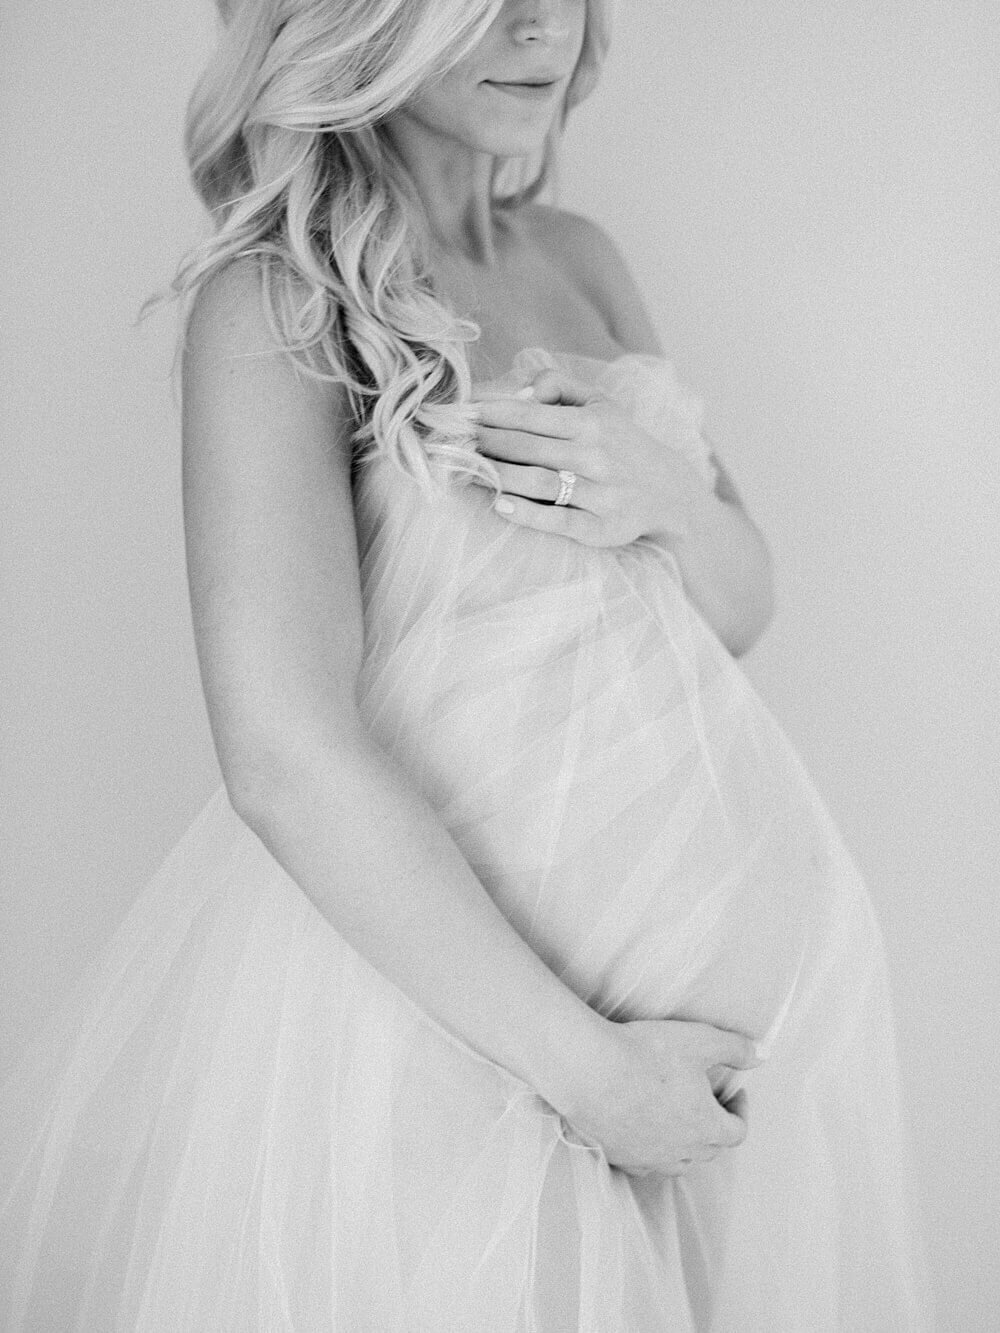 seattle-maternity-photographer-Jacqueline-Benet_0011